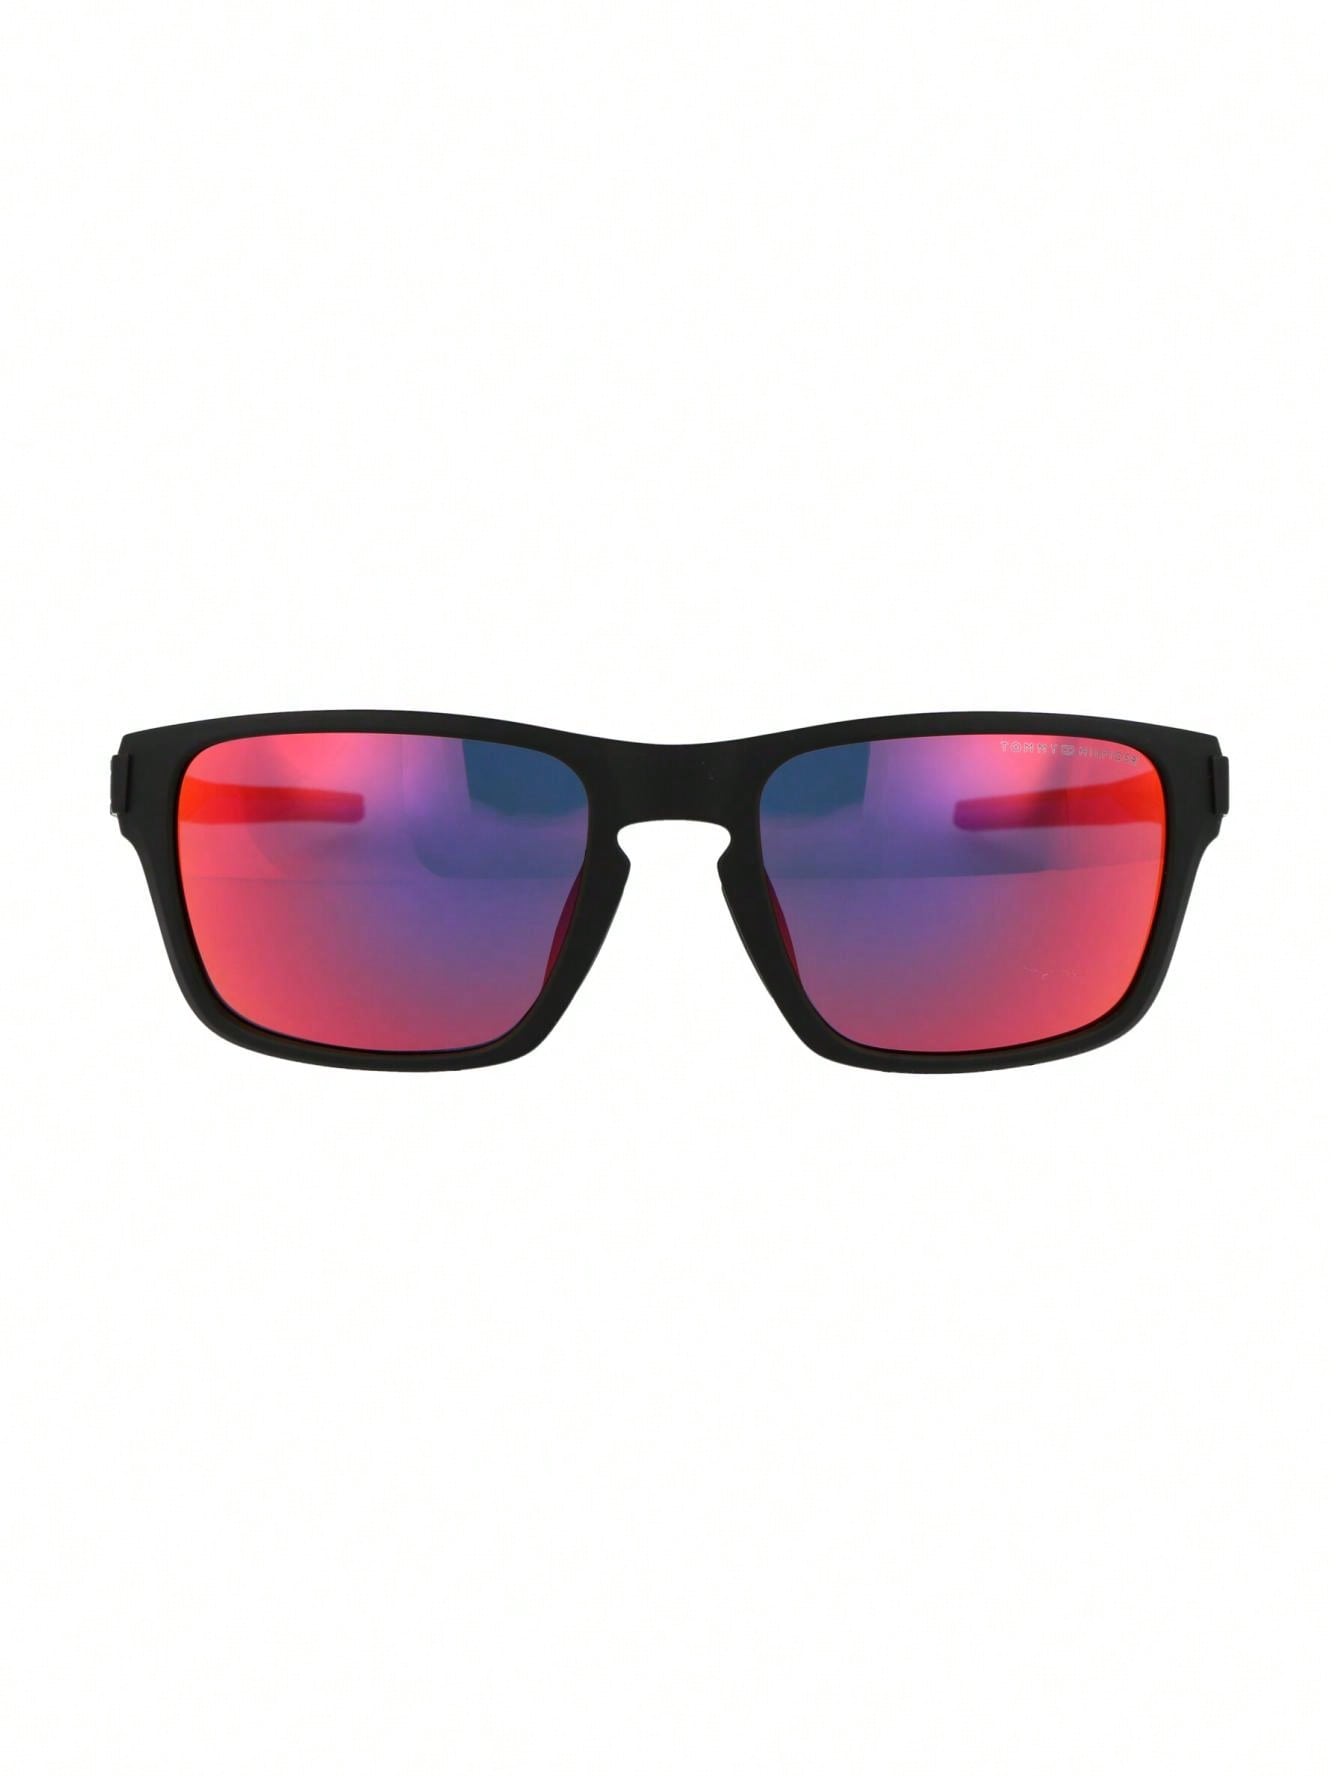 Мужские солнцезащитные очки Tommy Hilfiger DECOR TH1952S0VKPL, многоцветный солнцезащитные очки tommy hilfiger серый